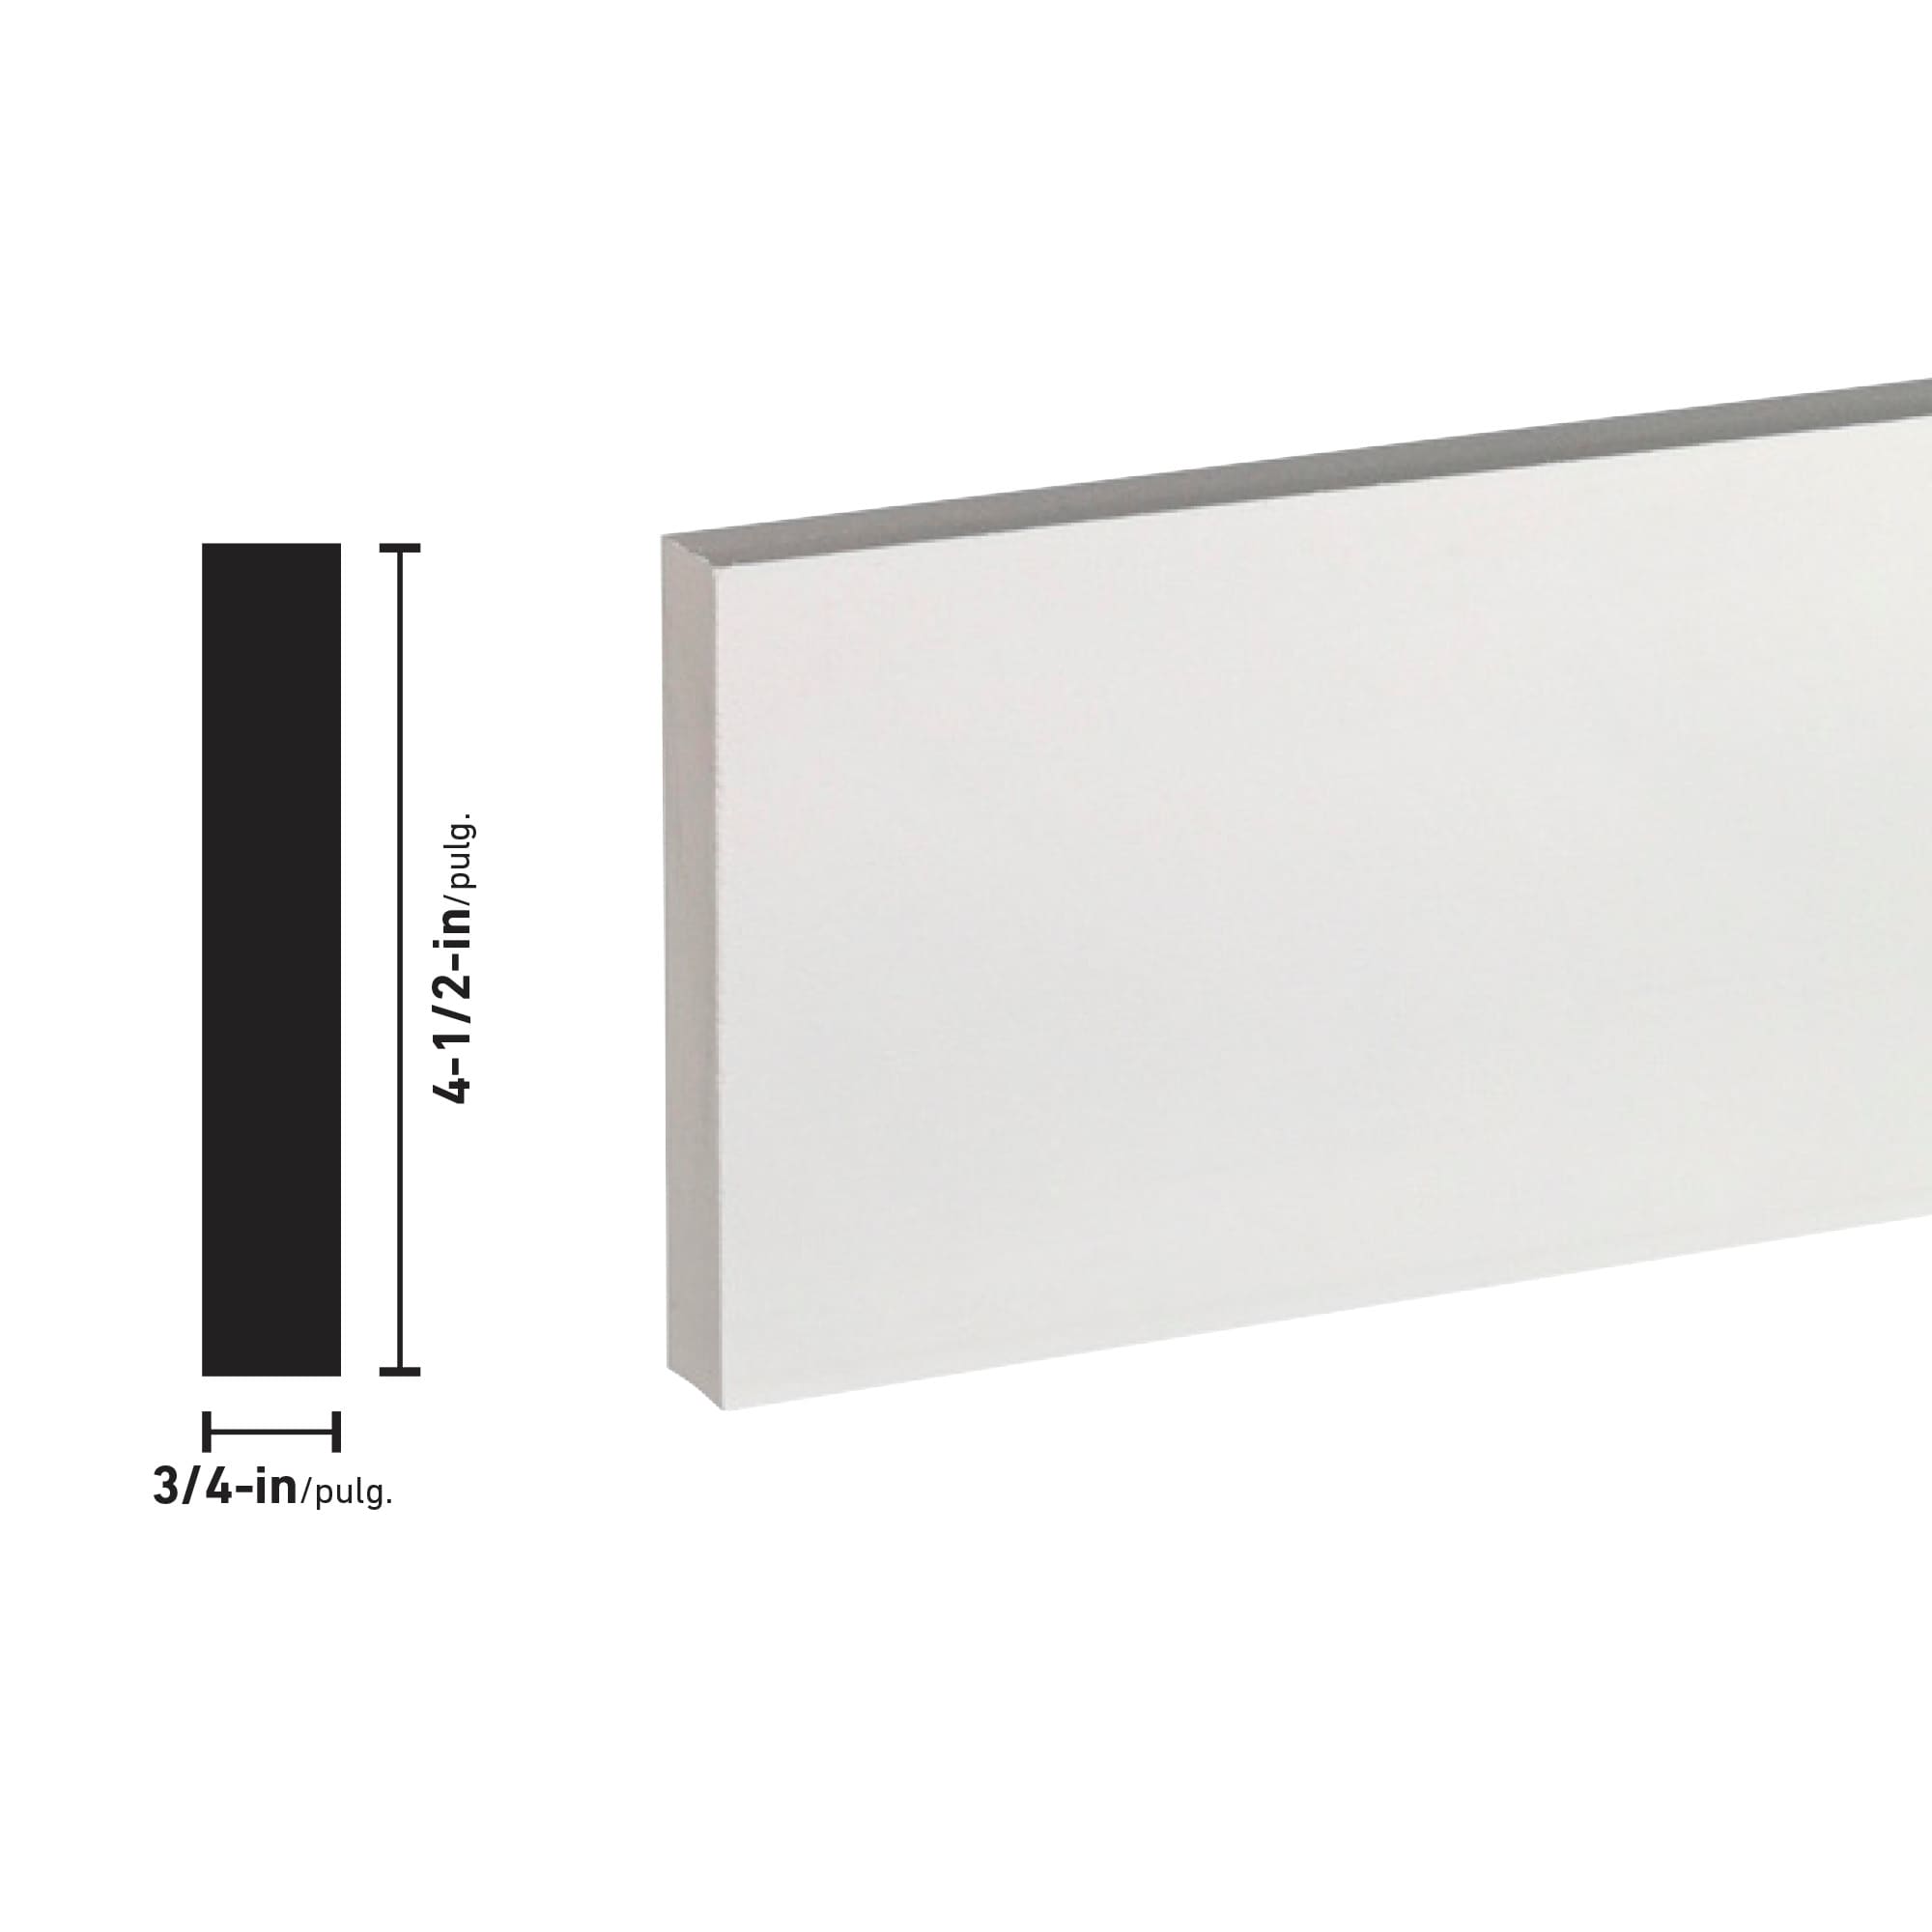 AZEK 0.75-in x 4.5-in x 8-ft S4S PVC Trim Board in the PVC Trim Boards ...